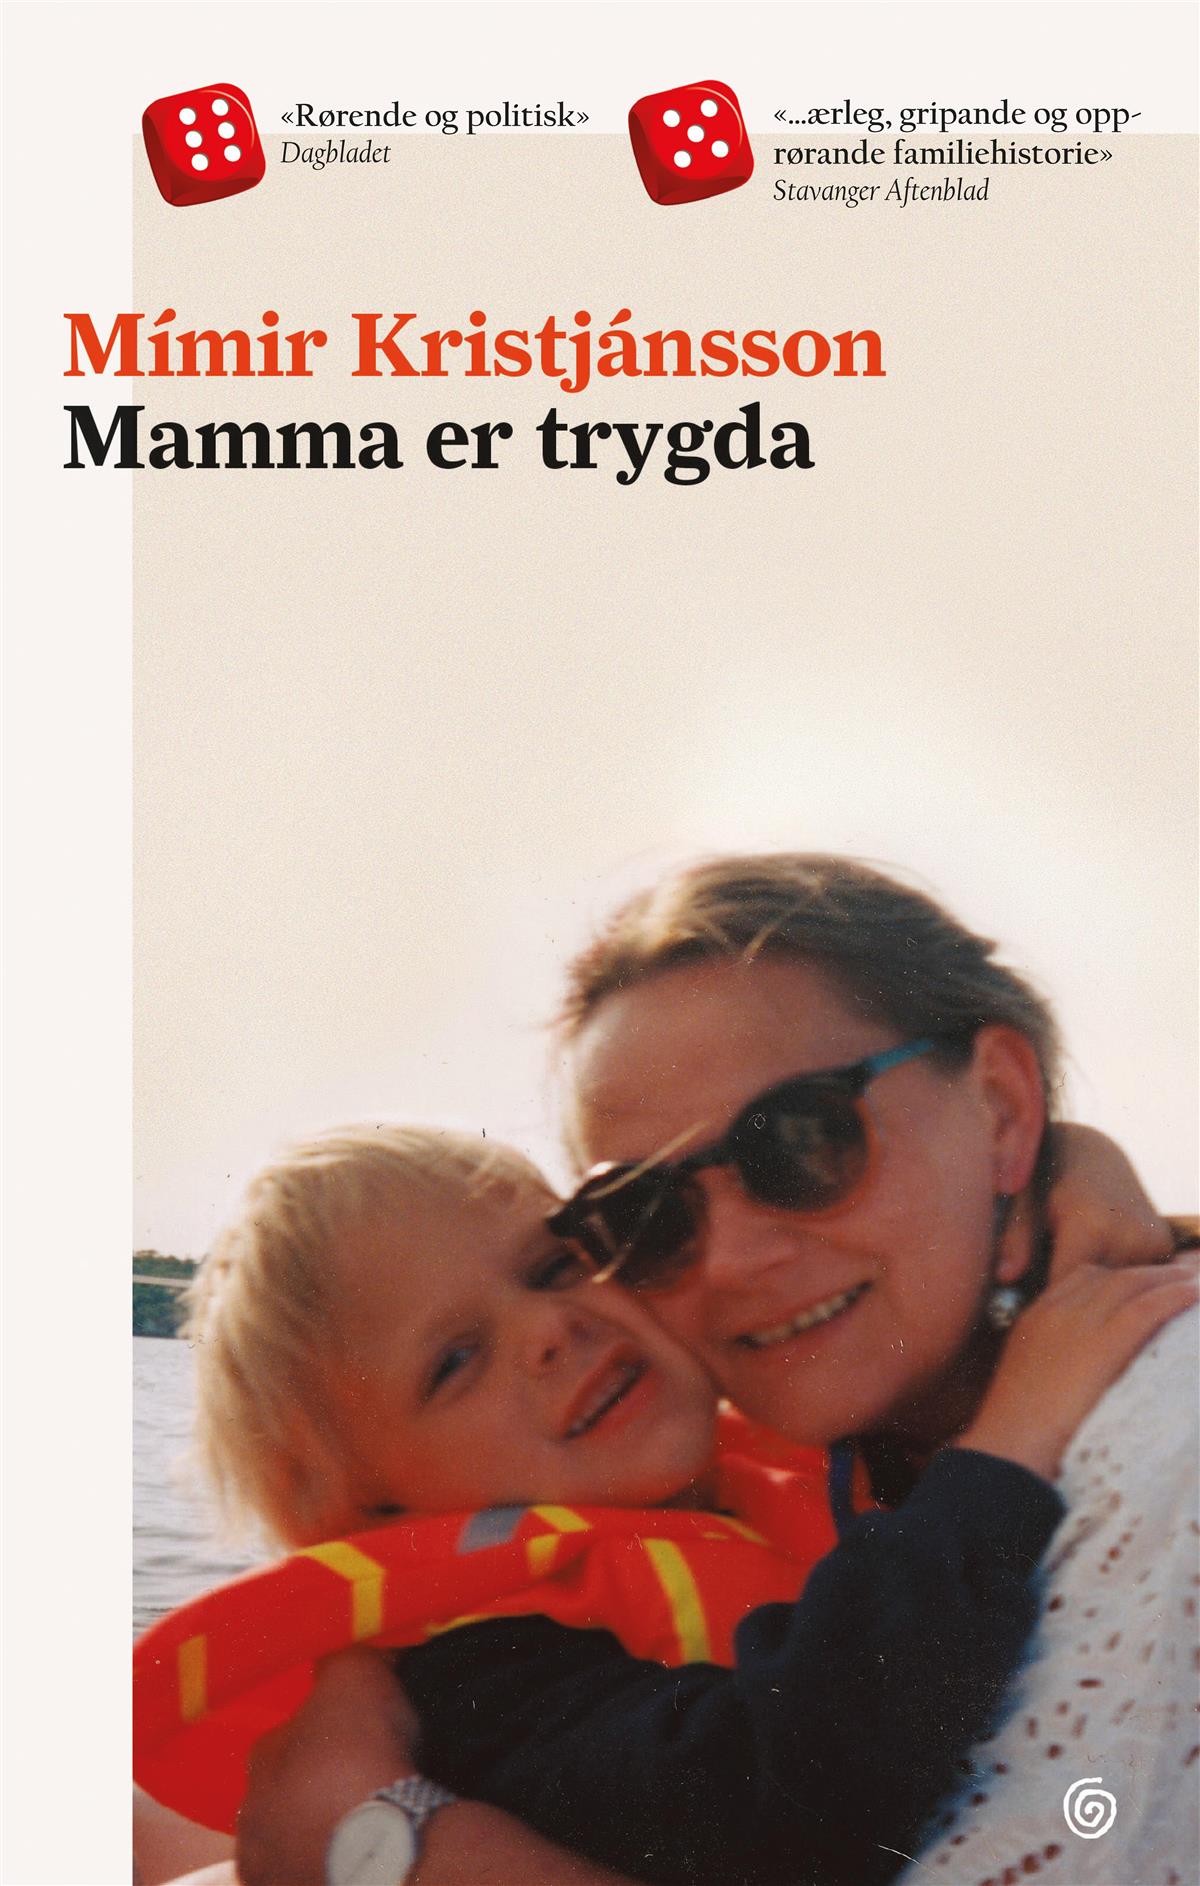 Bokomslag: "Mamma er trygda". Foto - Klikk for stort bilete